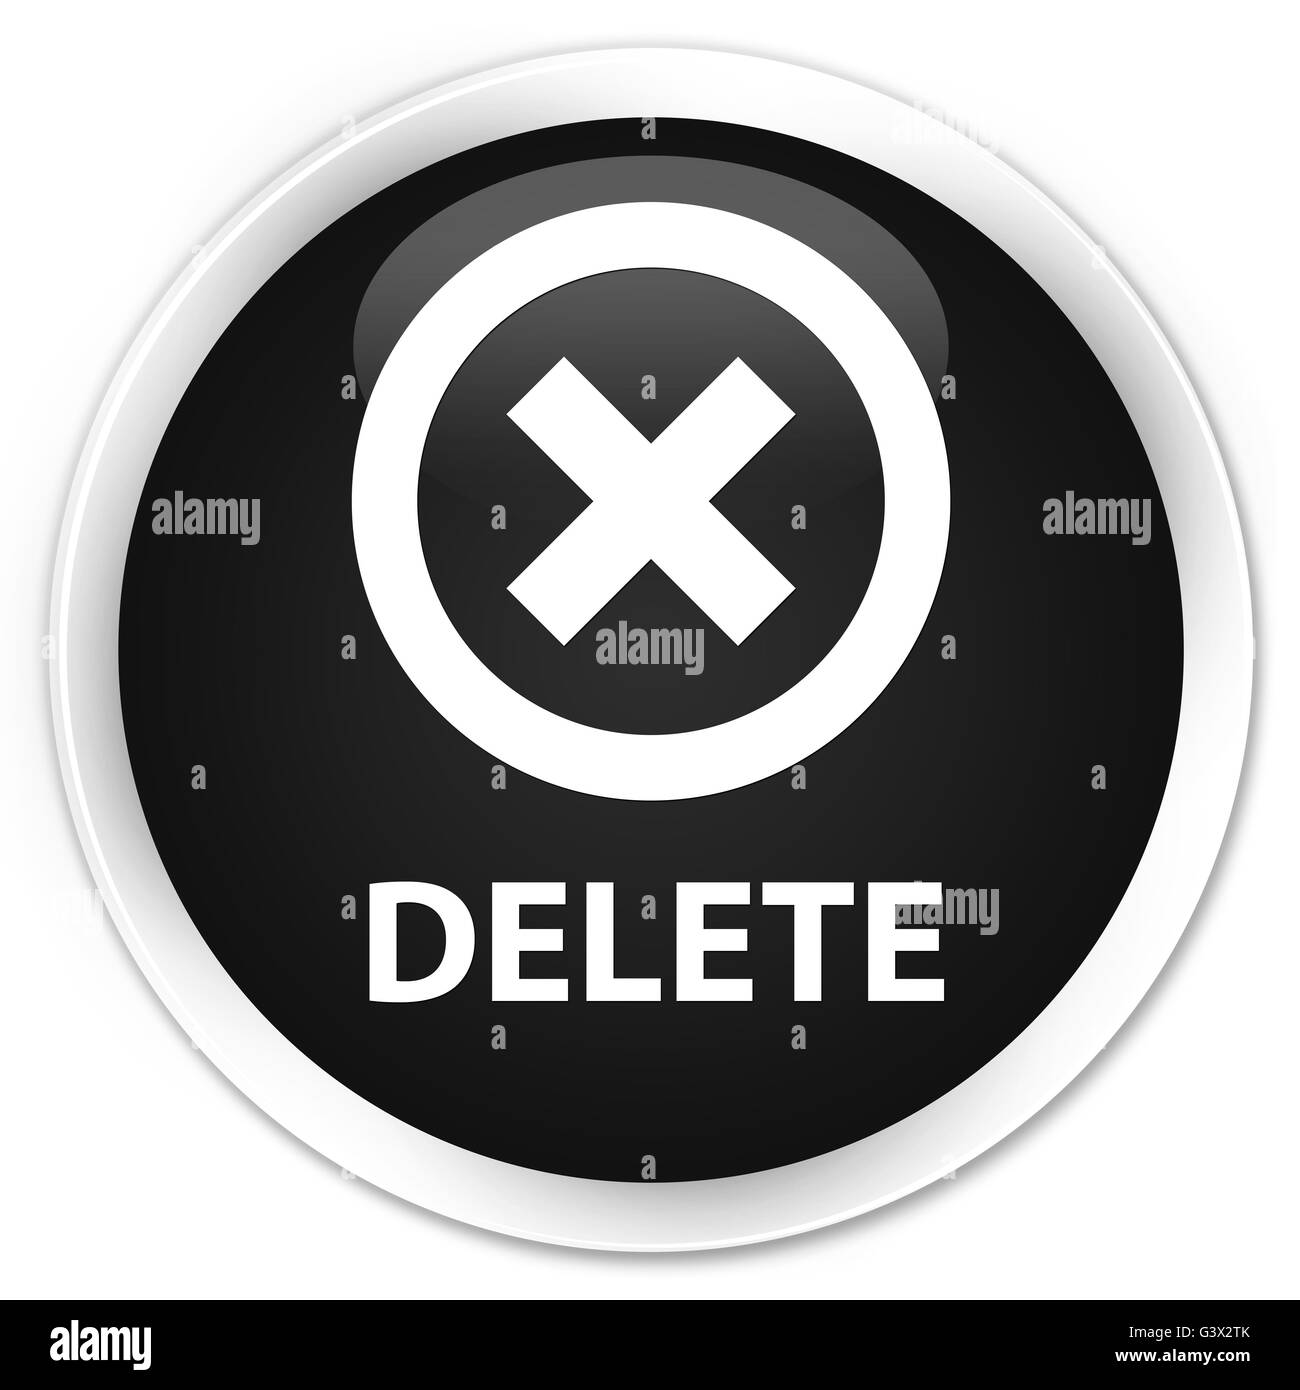 Delete isolated on premium black round button abstract illustration Stock Photo